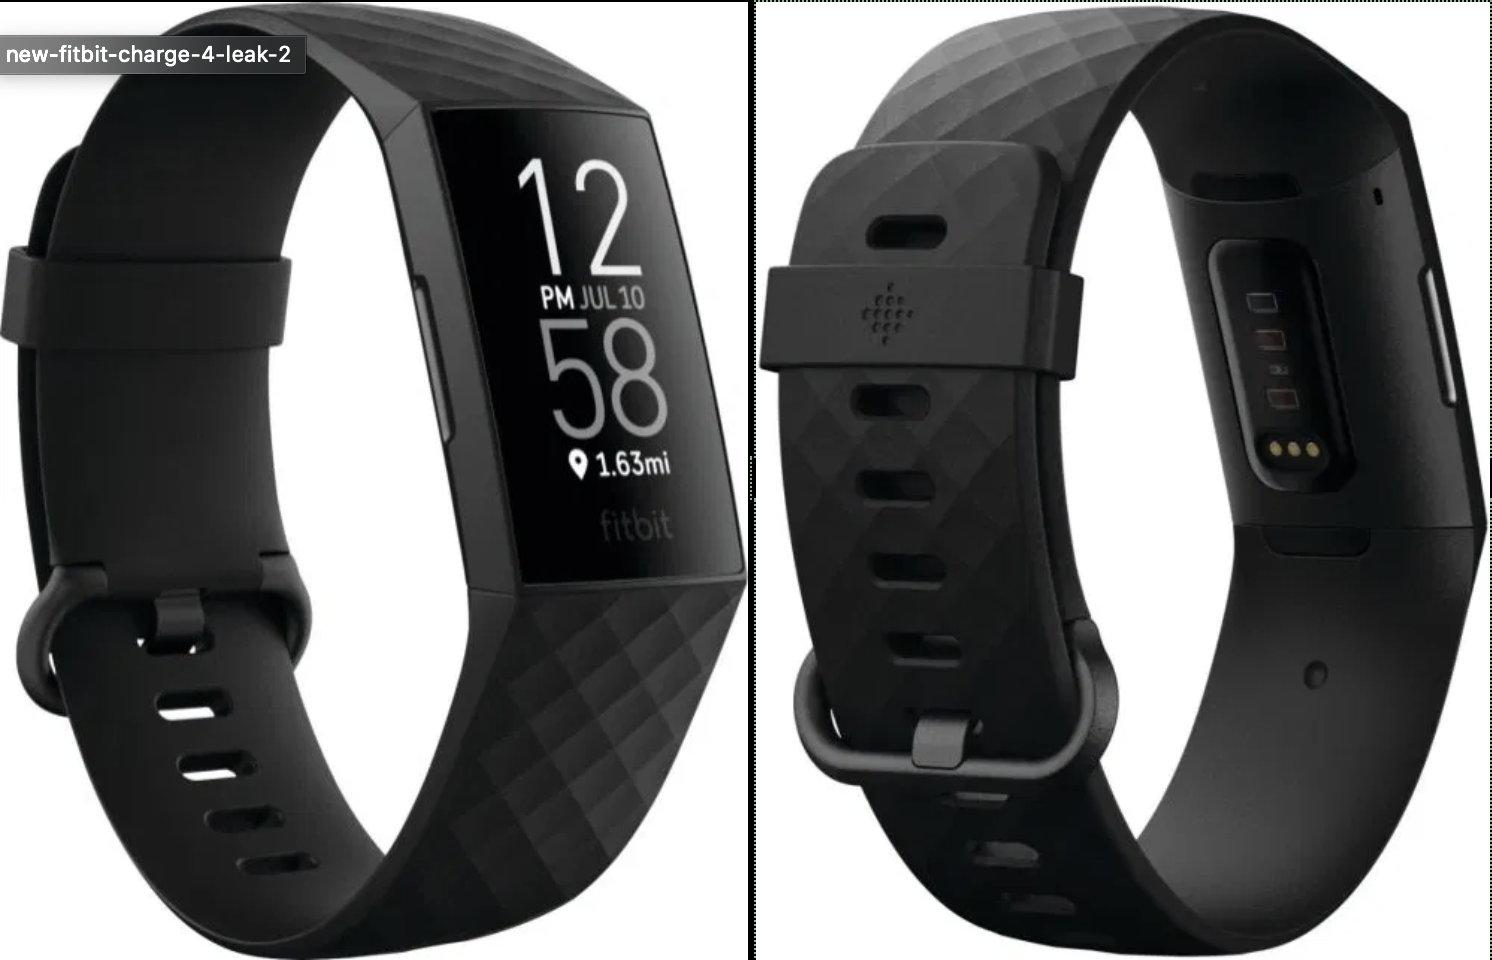 Fitbitの新型活動量計｢Fitbit Charge 4｣の製品画像が流出 − 外観デザインはほぼ変わらず